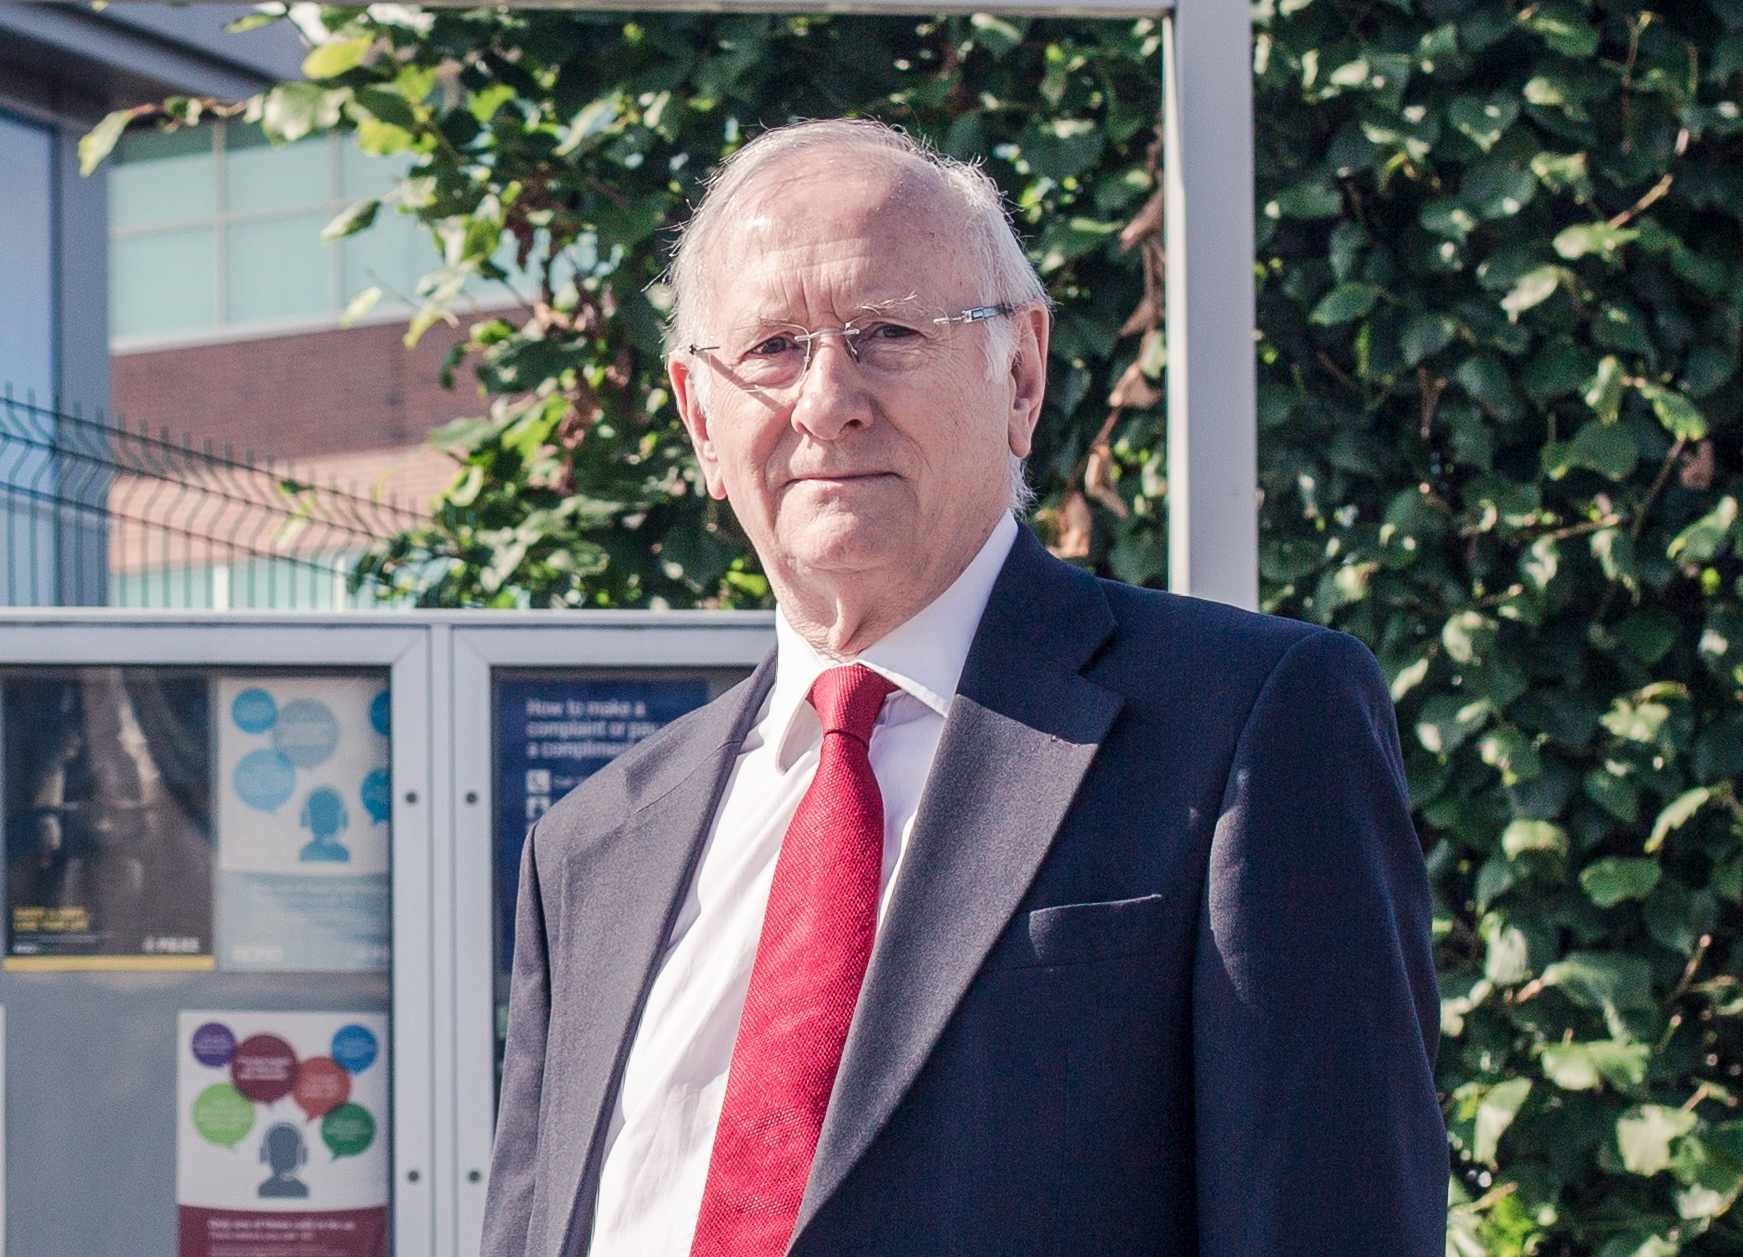 Dr Alan Billings, South Yorkshire Police and Crime Commissioner